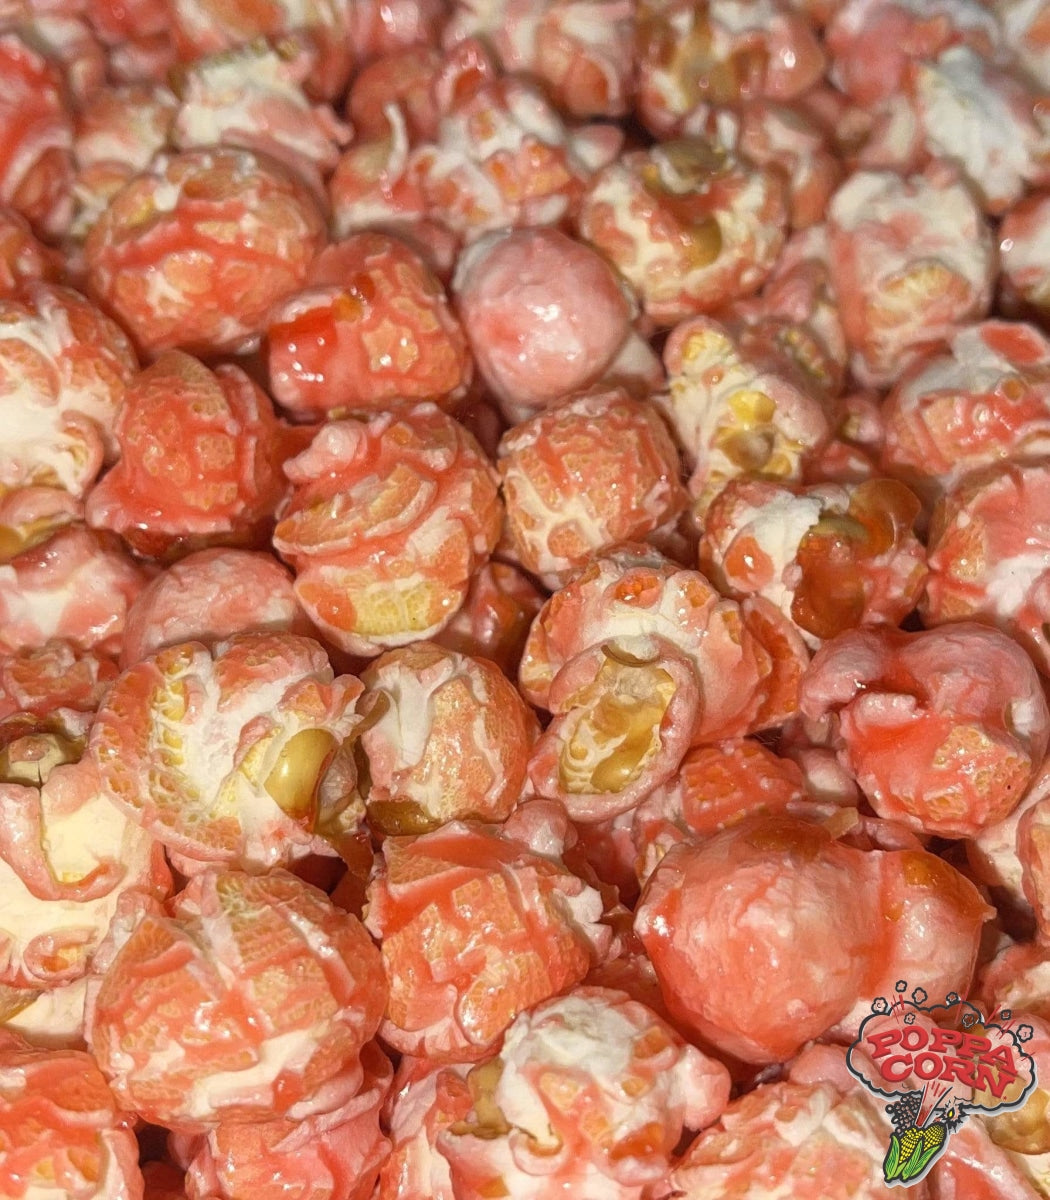 SPC014 - Bulk Pink Popcorn - Sweet Gourmet Popcorn - 10kg Bag in Box **NEW** - Poppa Corn Corp